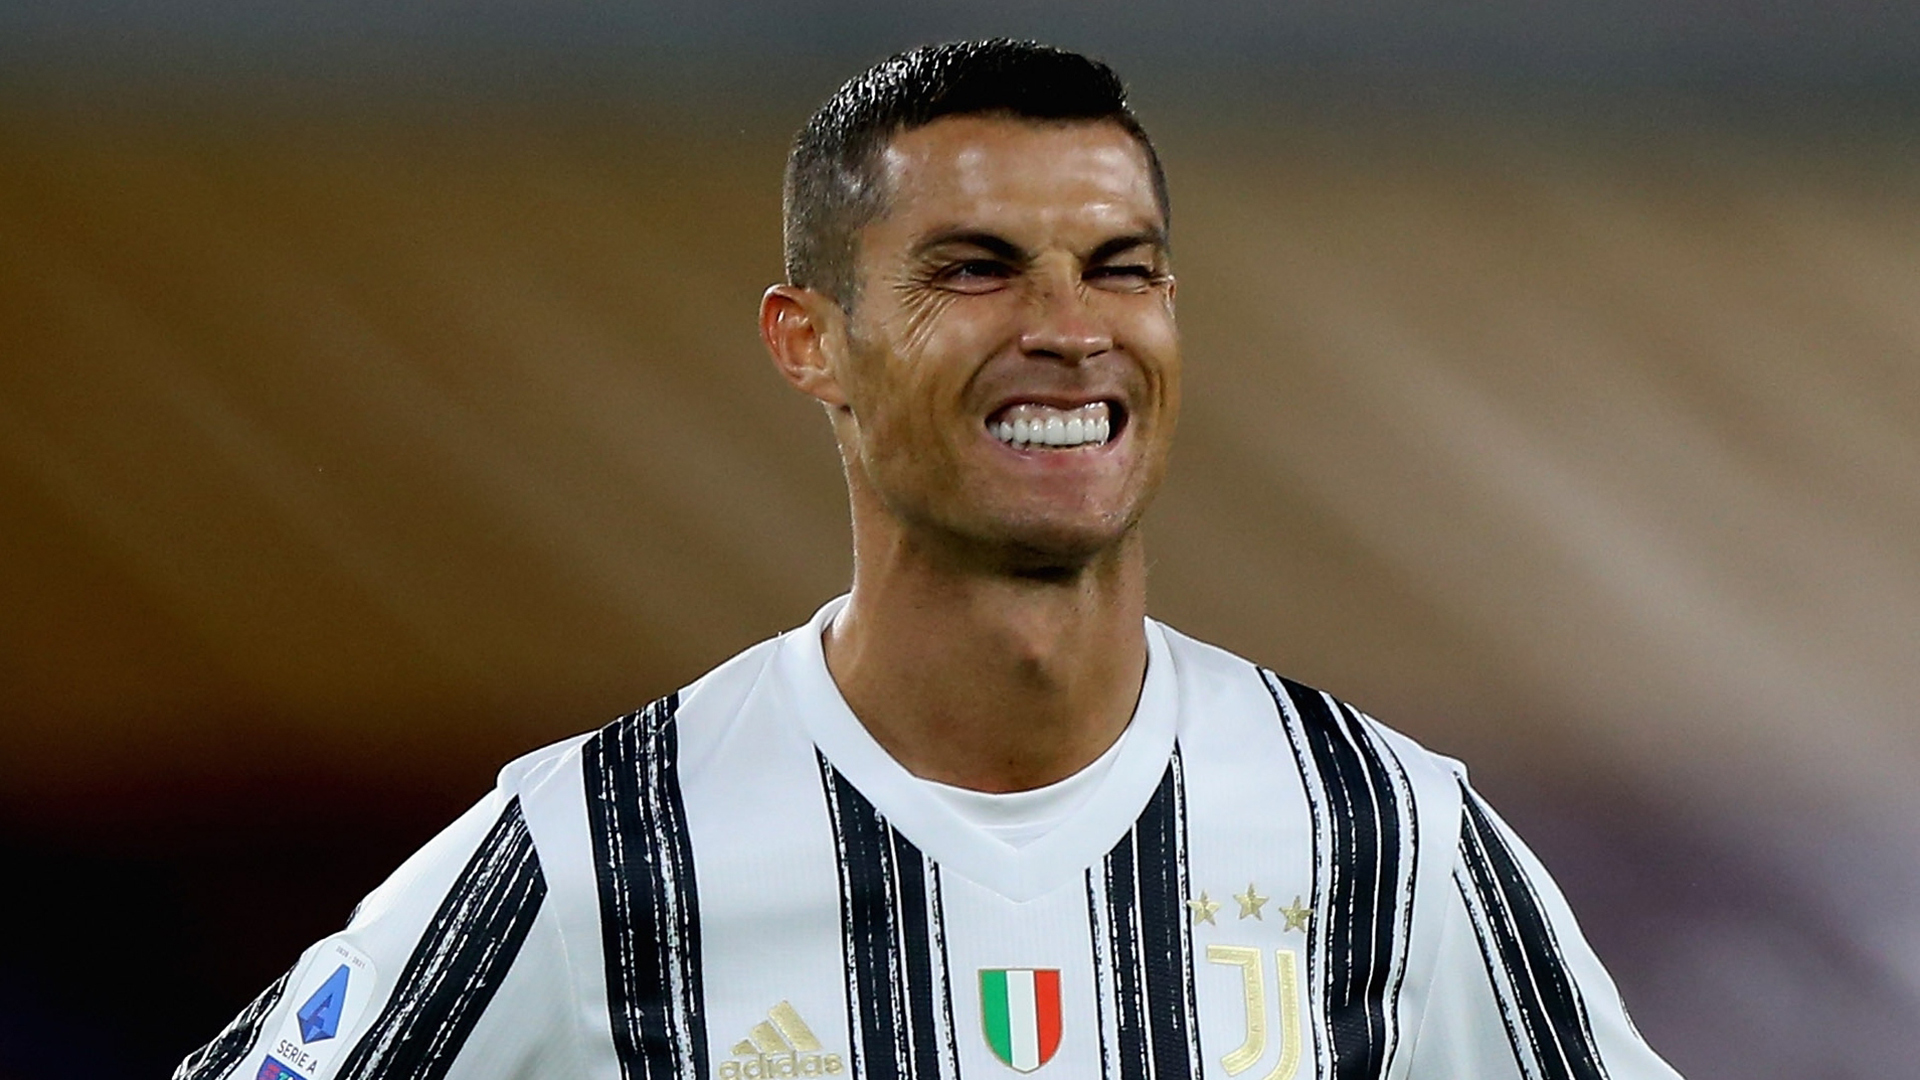 'I think he violated protocol' - Ronaldo may have broken coronavirus rules despite Juventus claiming clearance for return